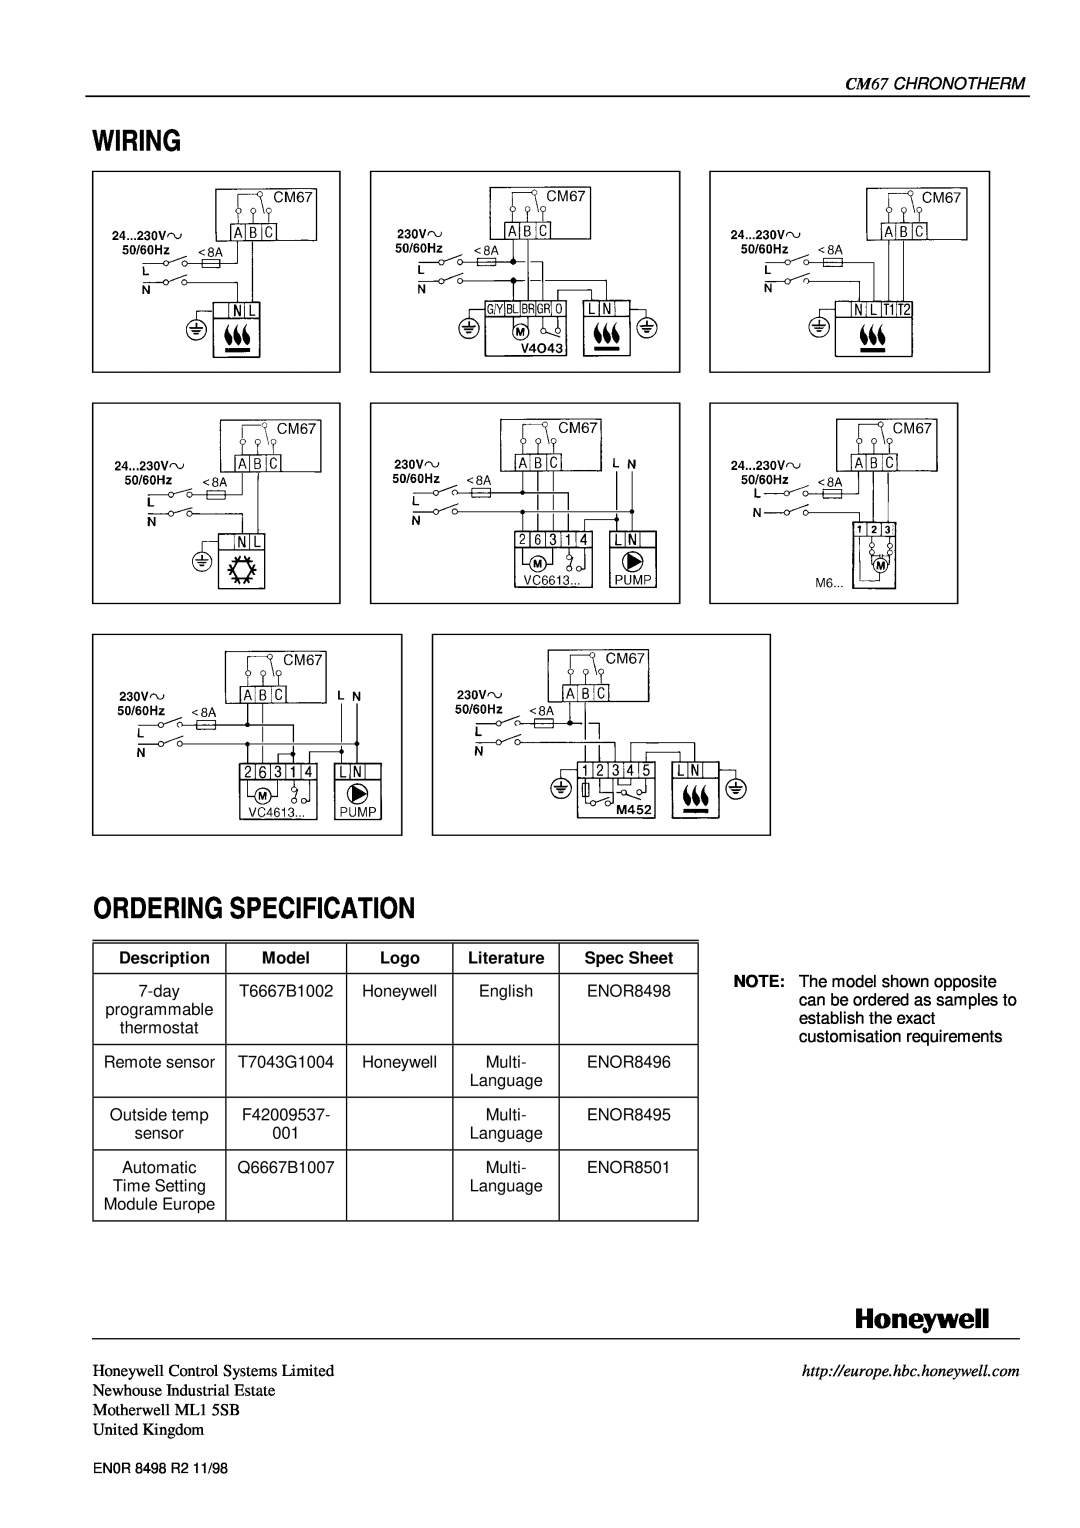 Honeywell CM67 specifications Wiring Ordering Specification, Description, Model, Logo, Literature, Spec Sheet 